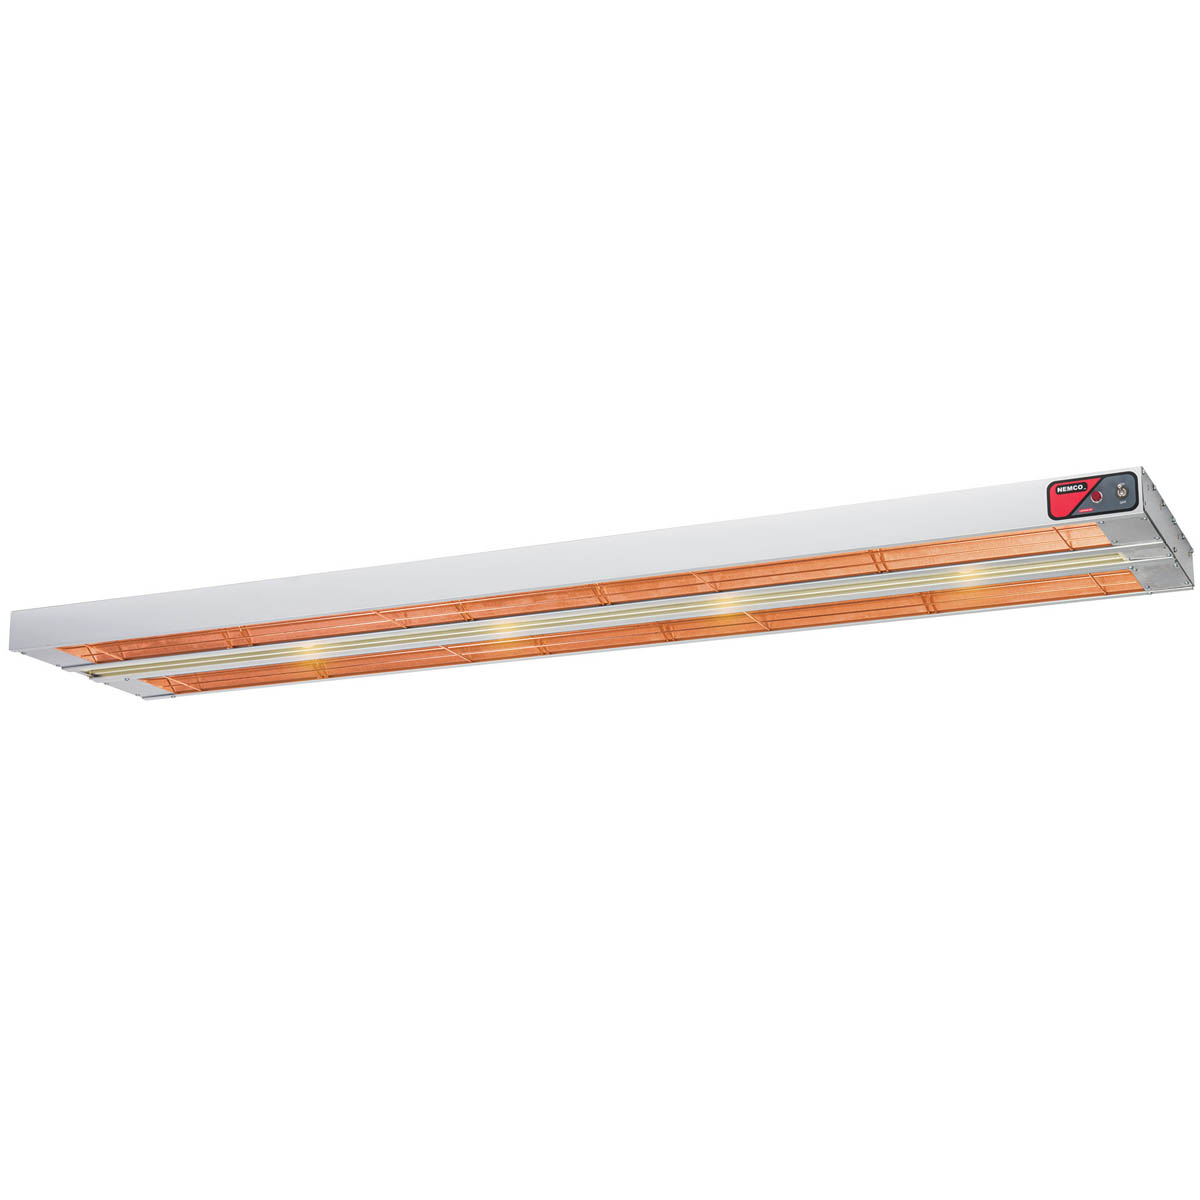 Nemco 6150-72-D-240 Strip Type Heat Lamp